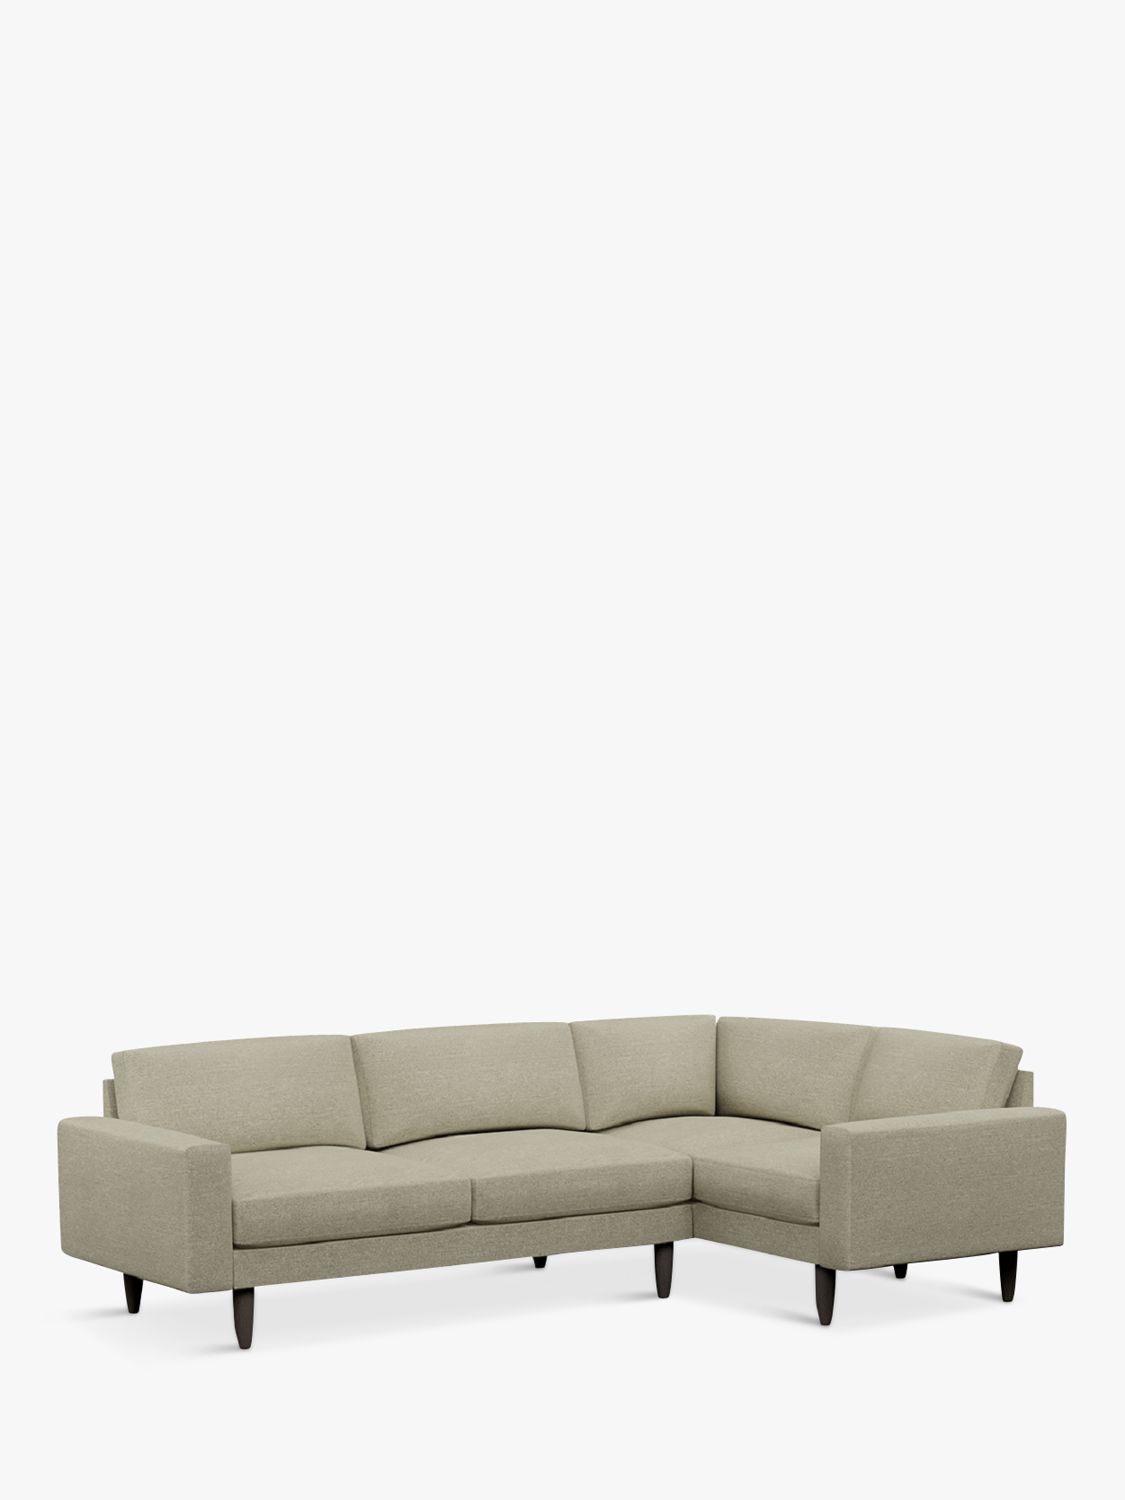 Rise Range, Hutch Rise Block Arm 5 Seater Slim Corner Sofa, Dark Leg, Textured Weave Oatmeal